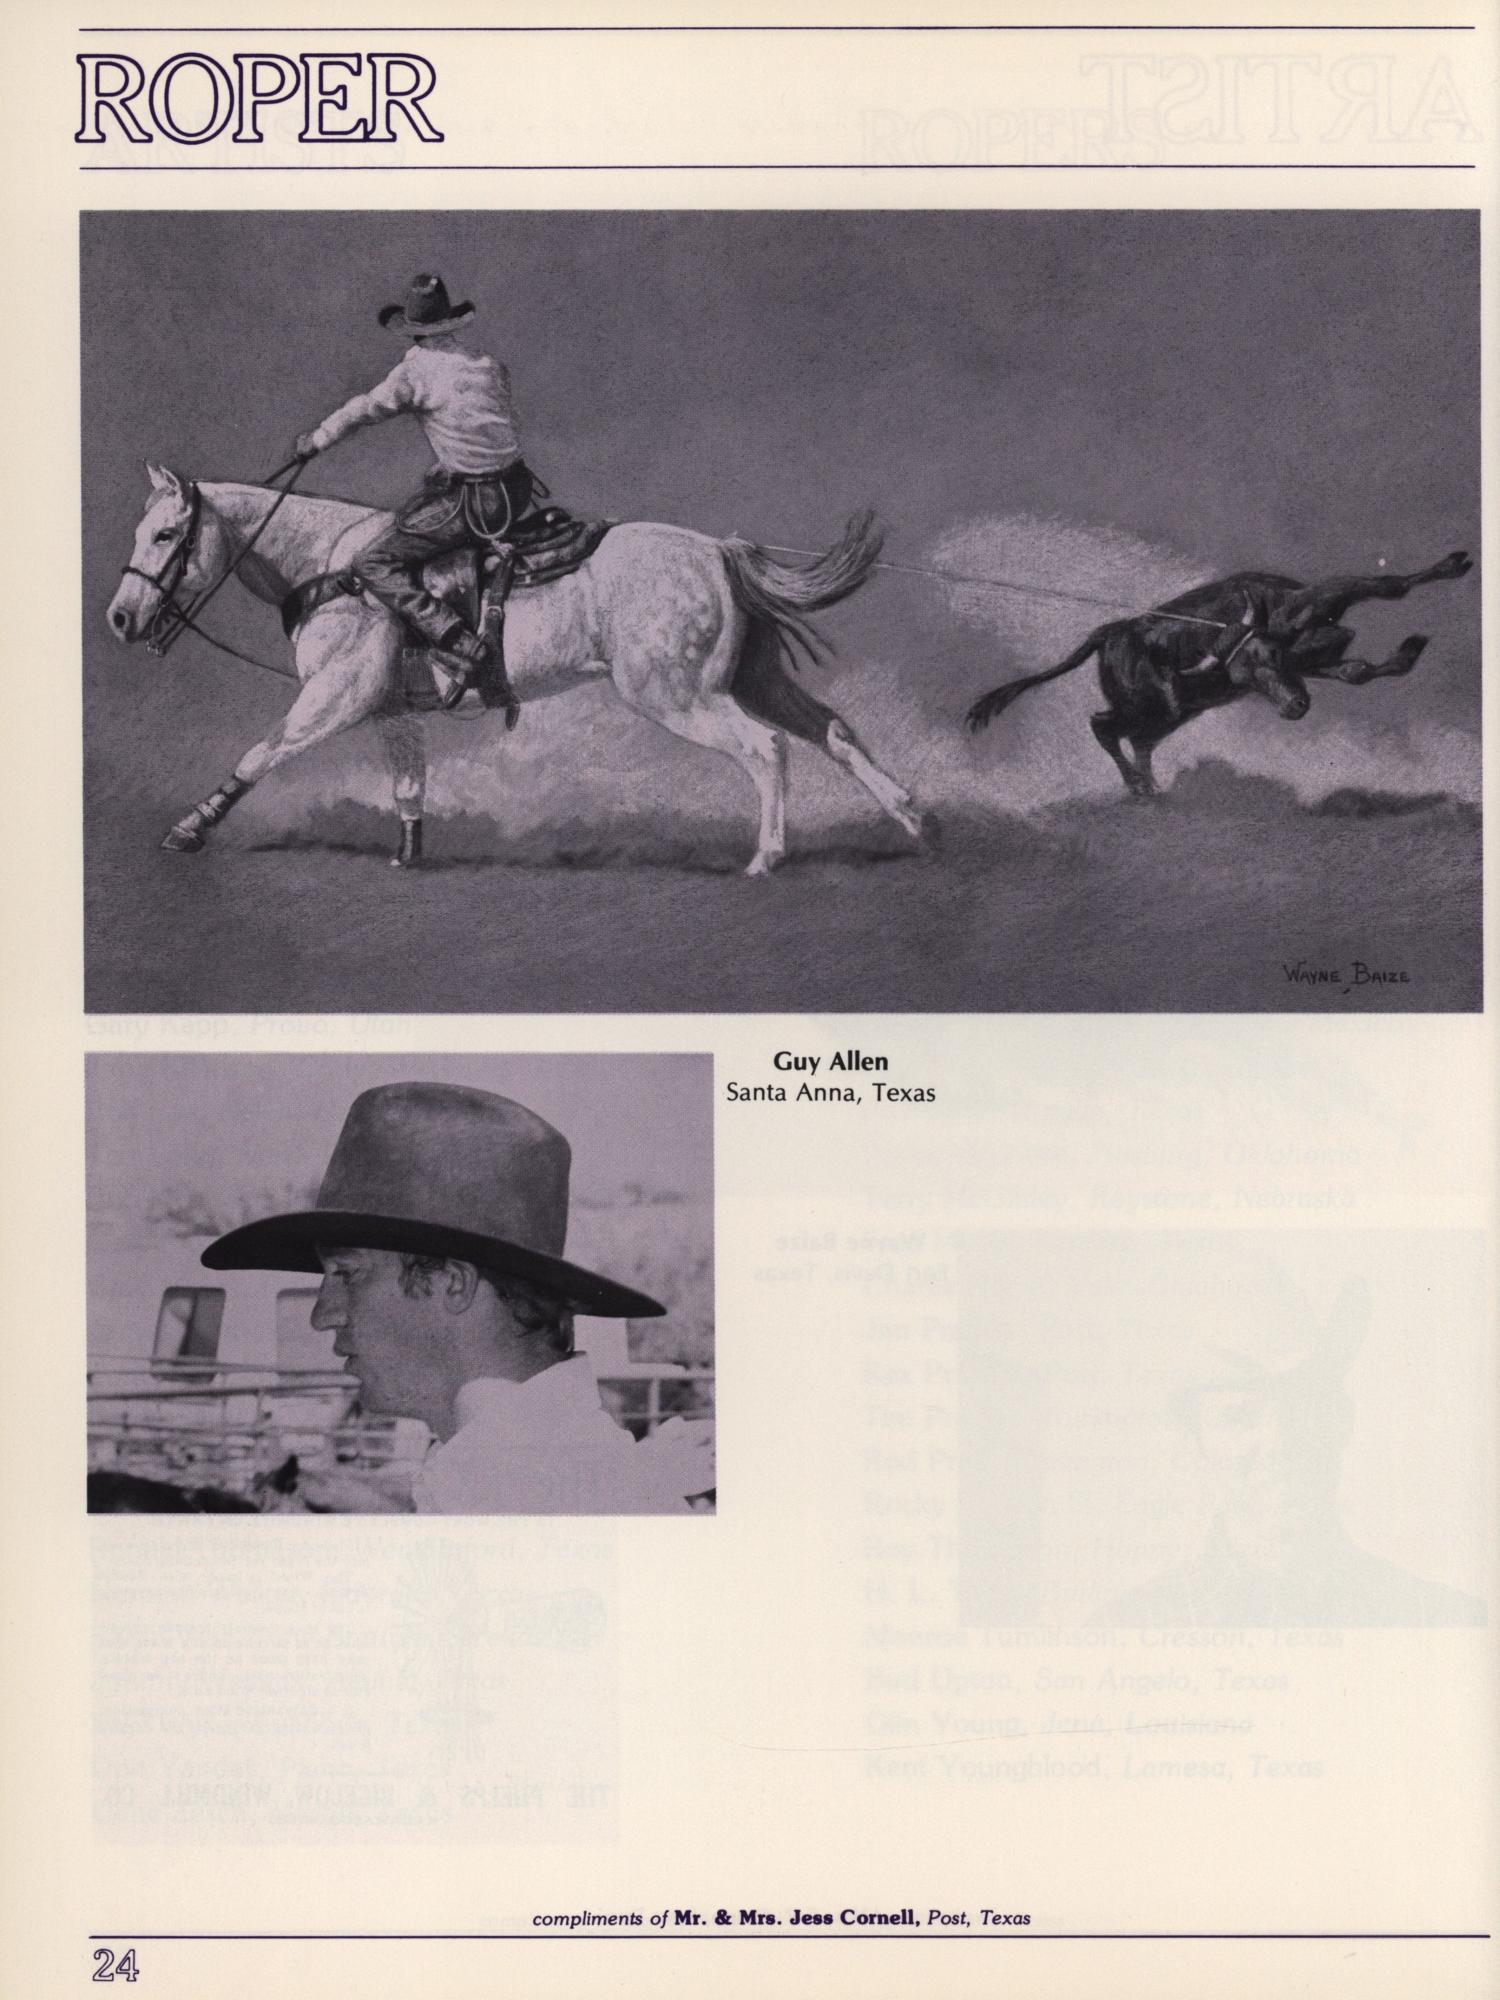 OS Ranch Steer Roping & Art Exhibit, October 2-4, 1982
                                                
                                                    24
                                                